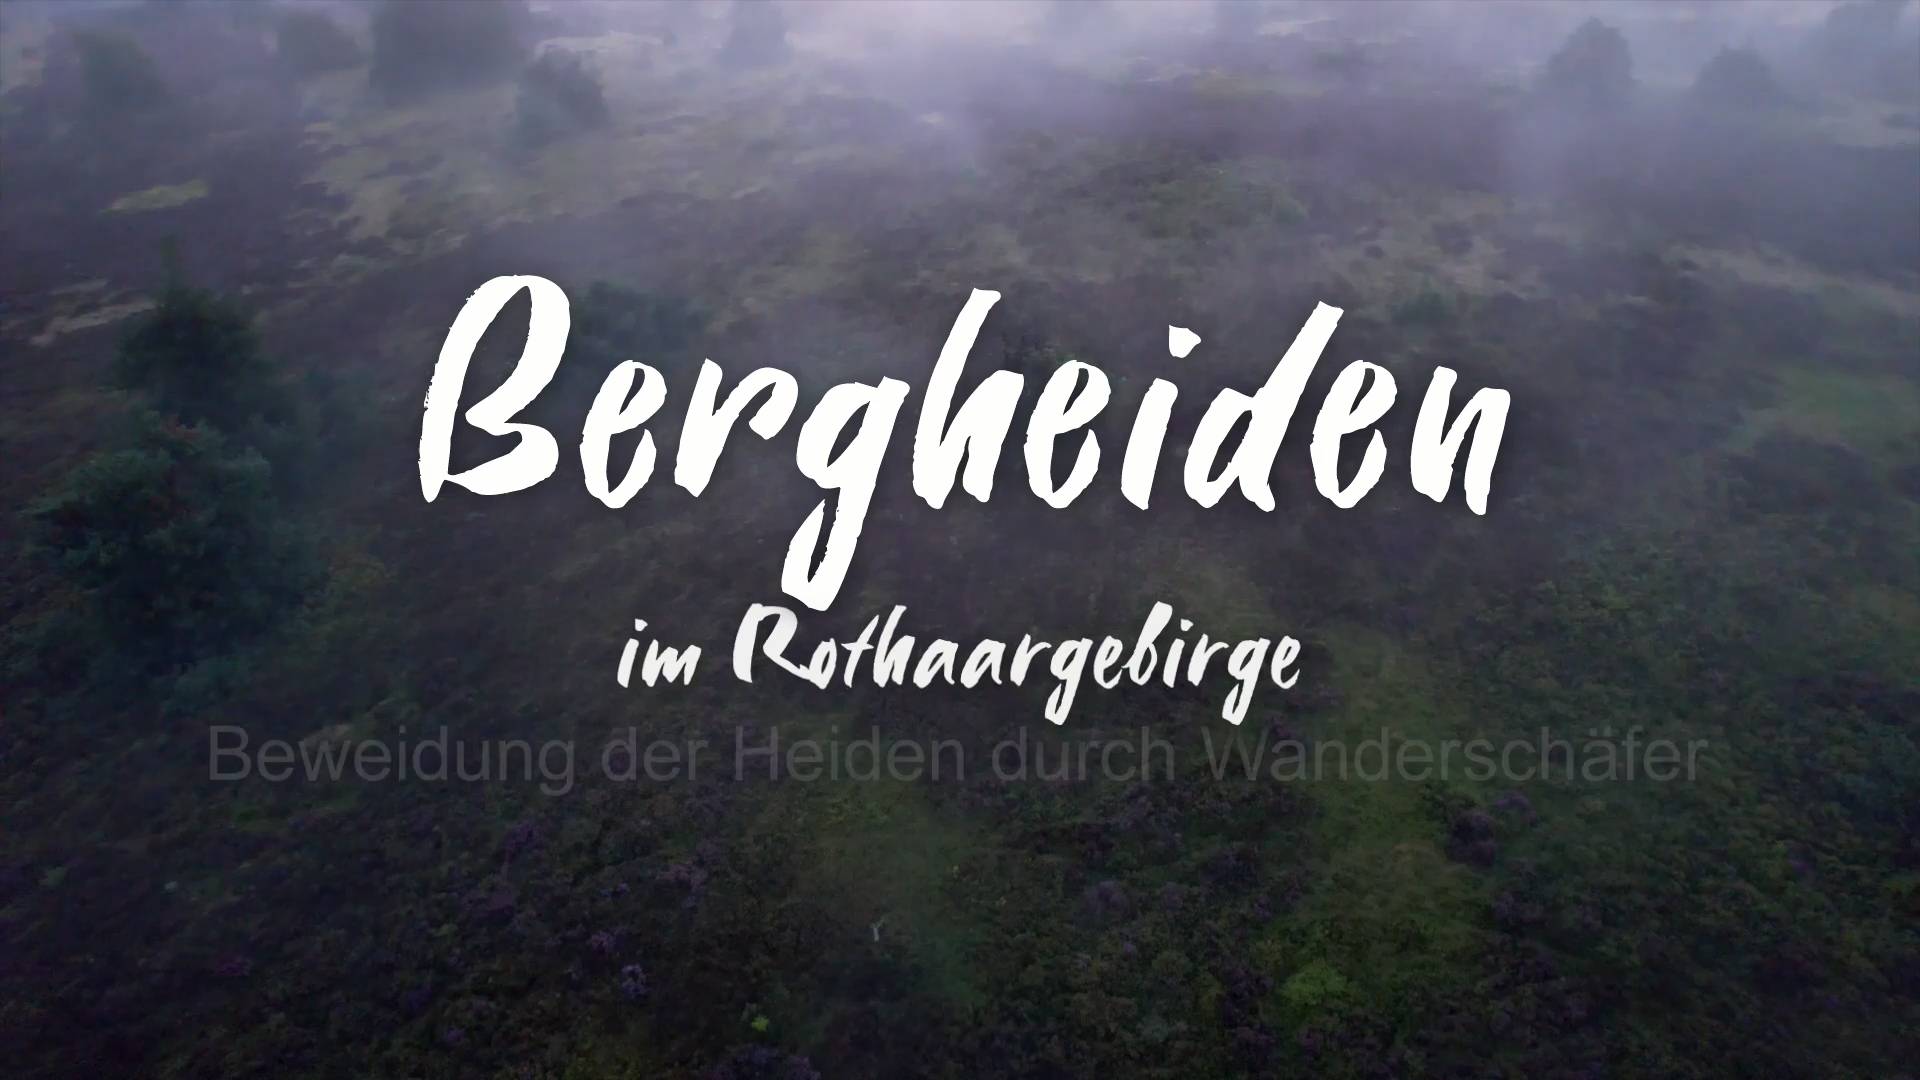 Bergheiden im Rothaargebirge | Beweidung der Heiden durch Wanderschäfer